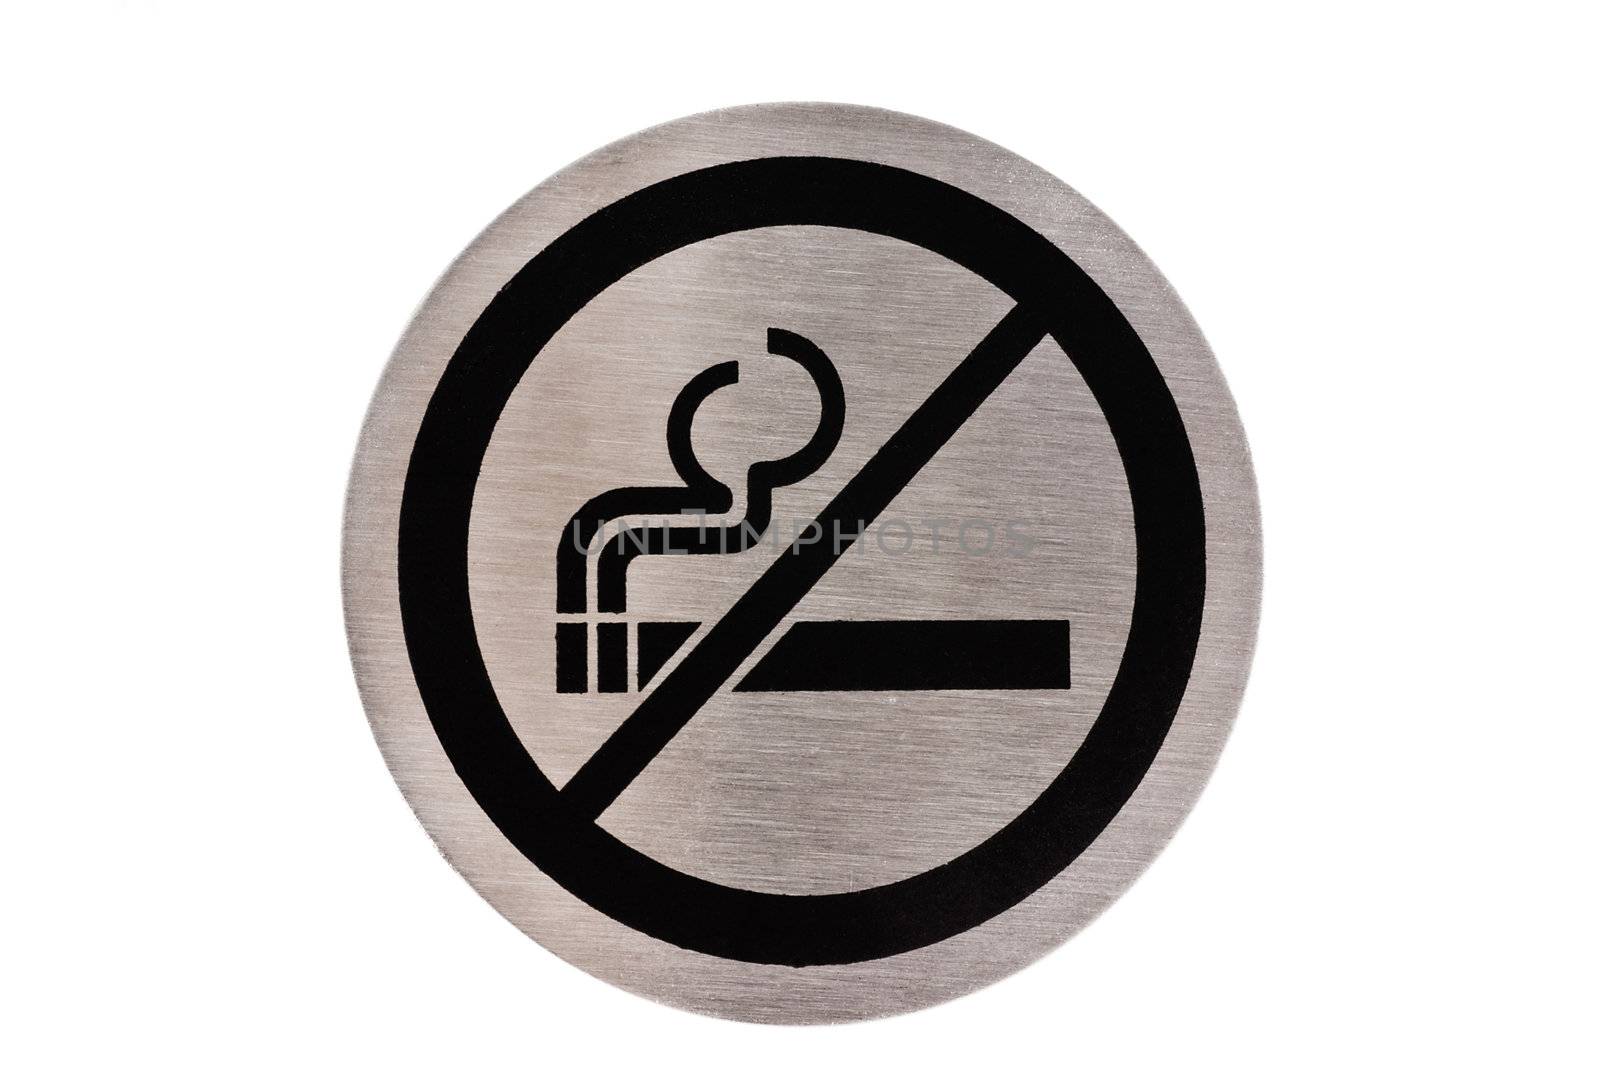 No smoking sign. by SasPartout